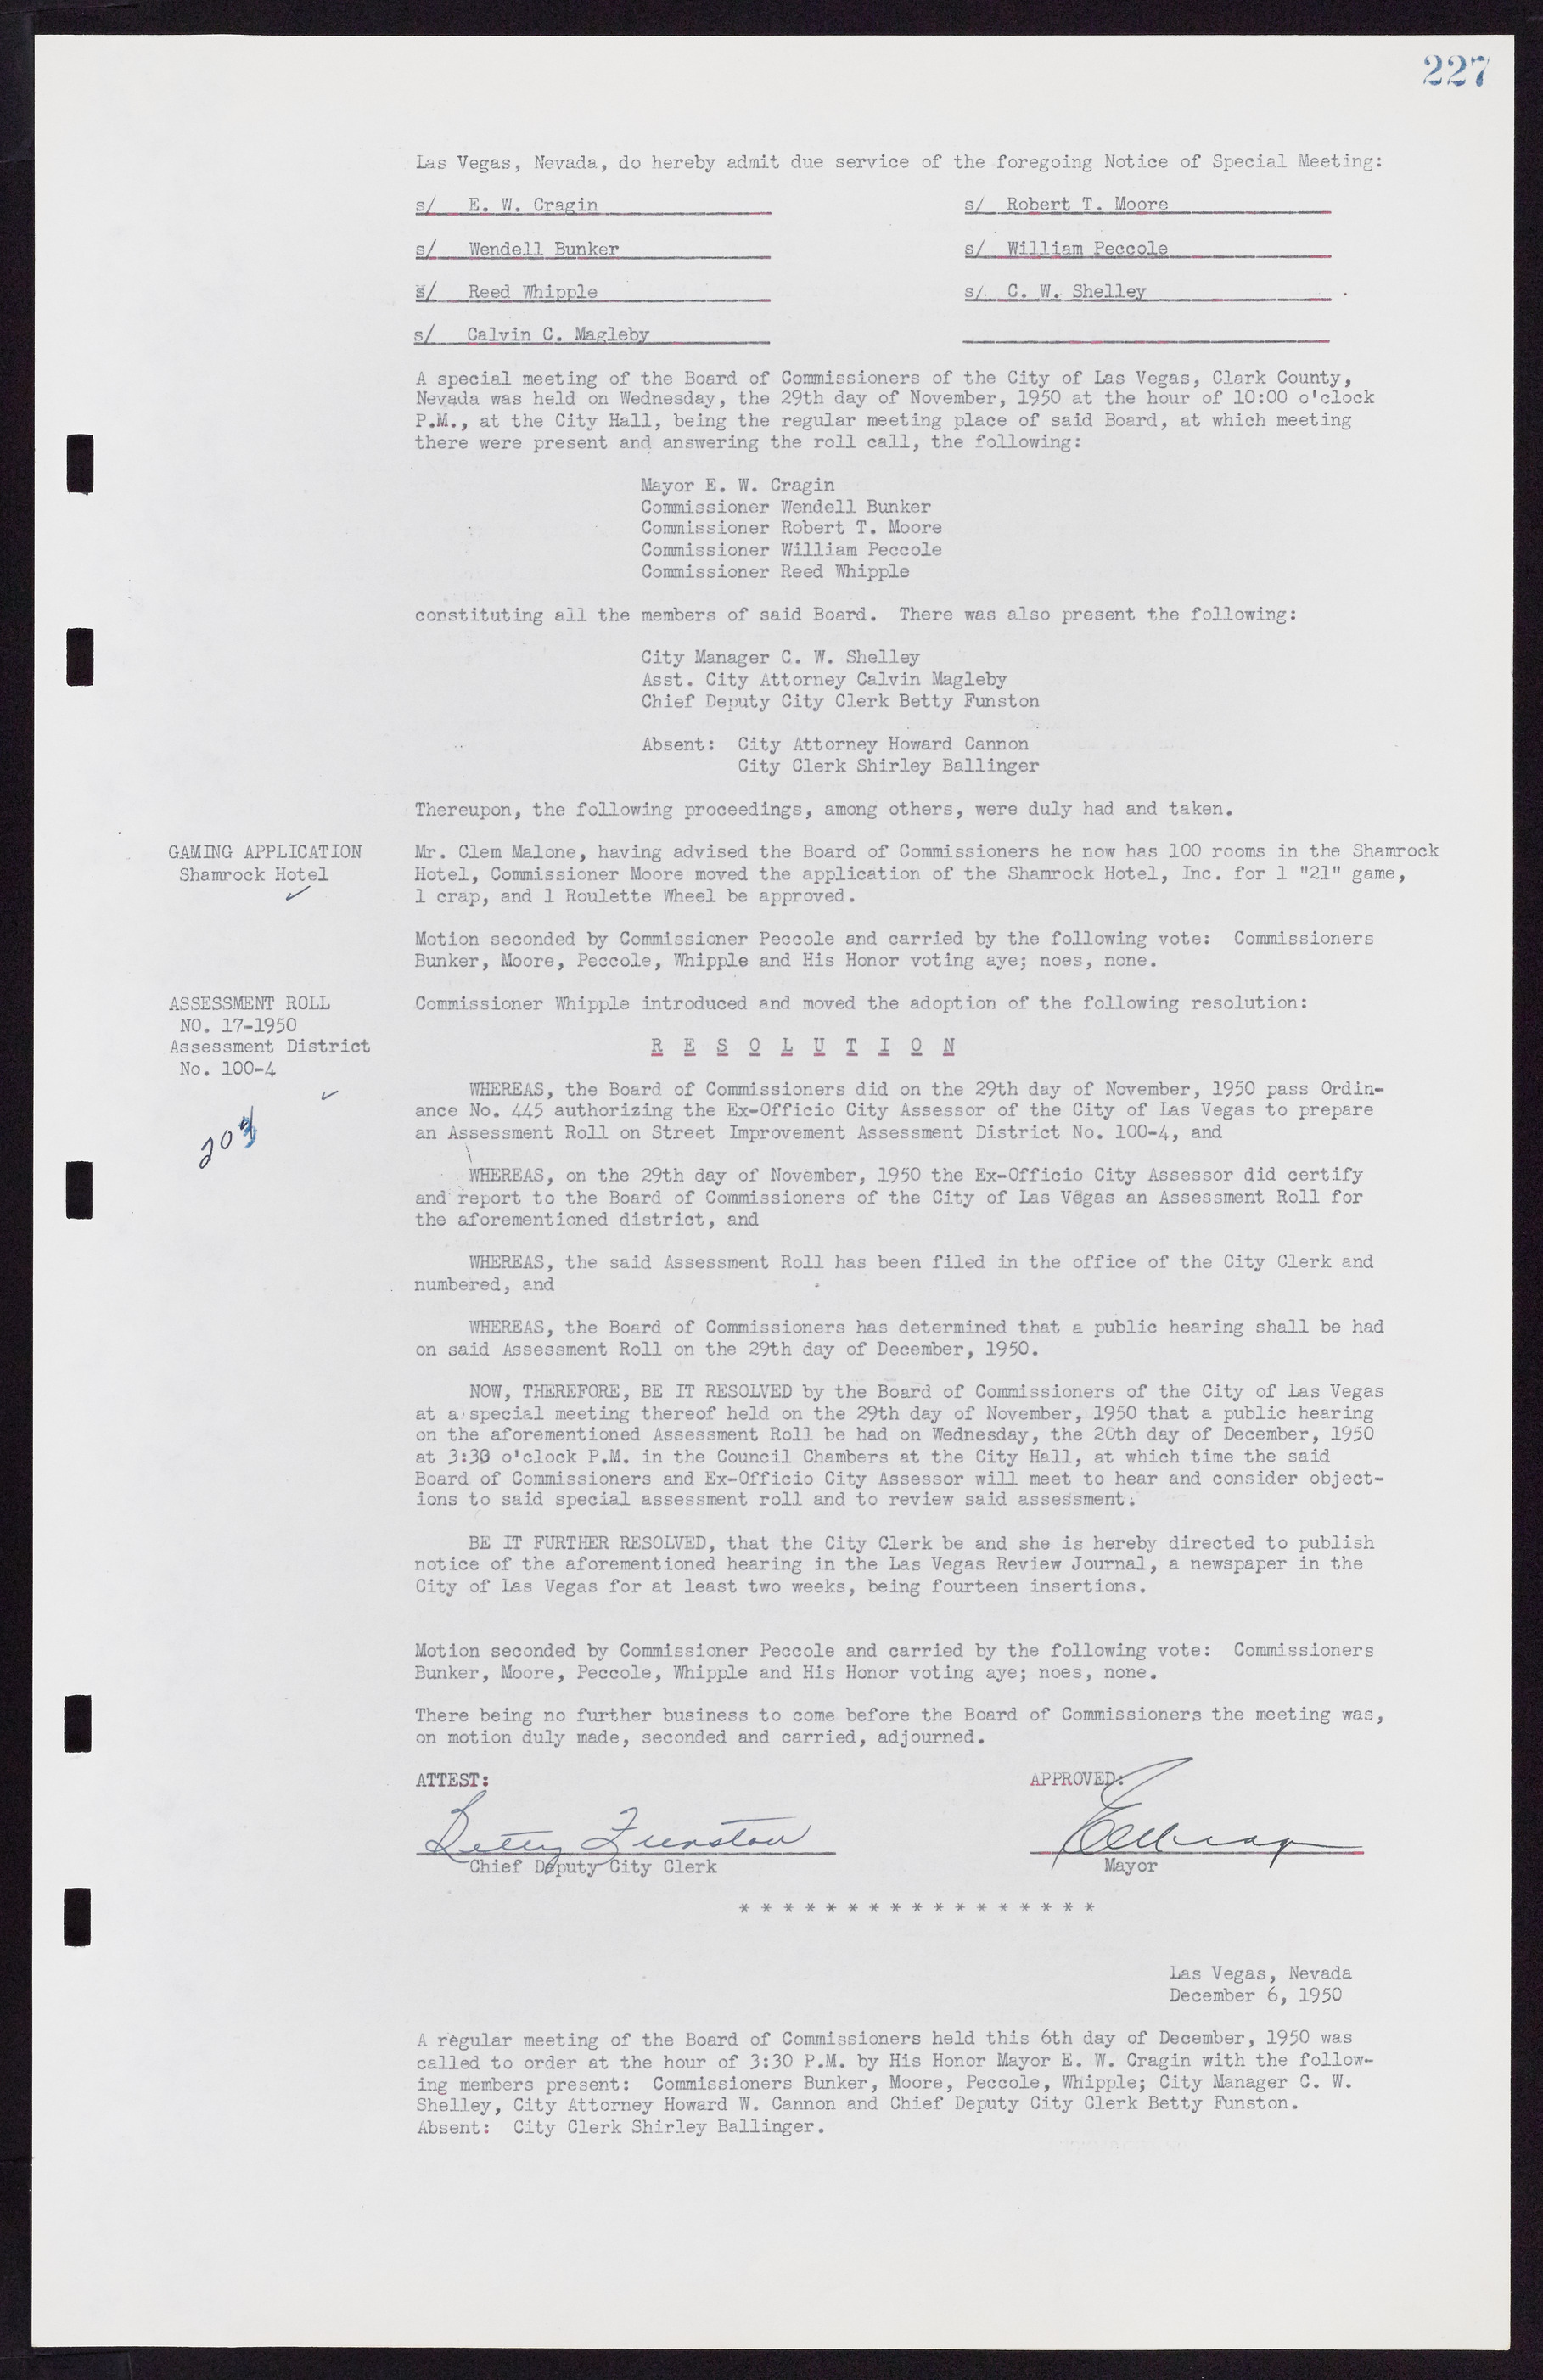 Las Vegas City Commission Minutes, November 7, 1949 to May 21, 1952, lvc000007-237